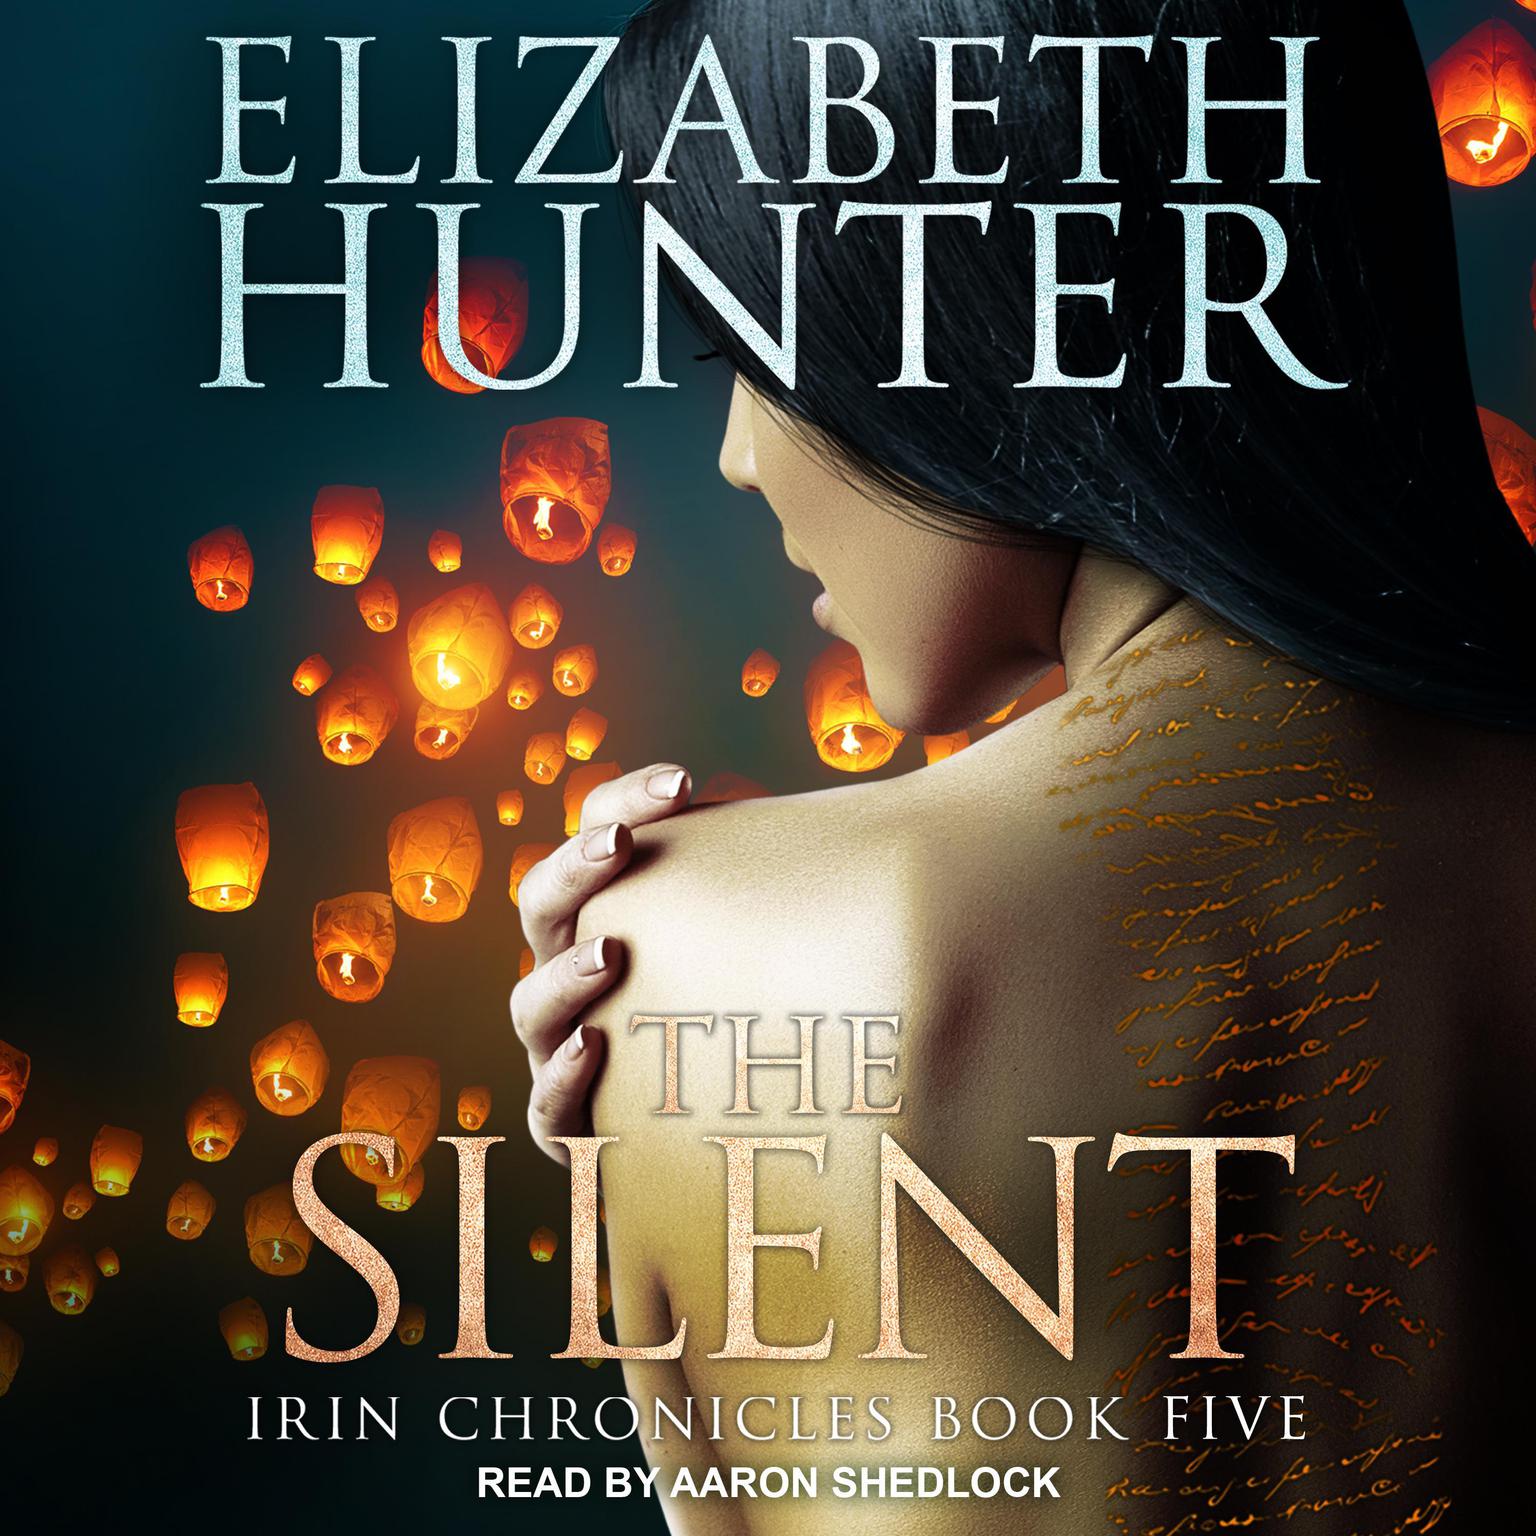 The Silent Audiobook, by Elizabeth Hunter